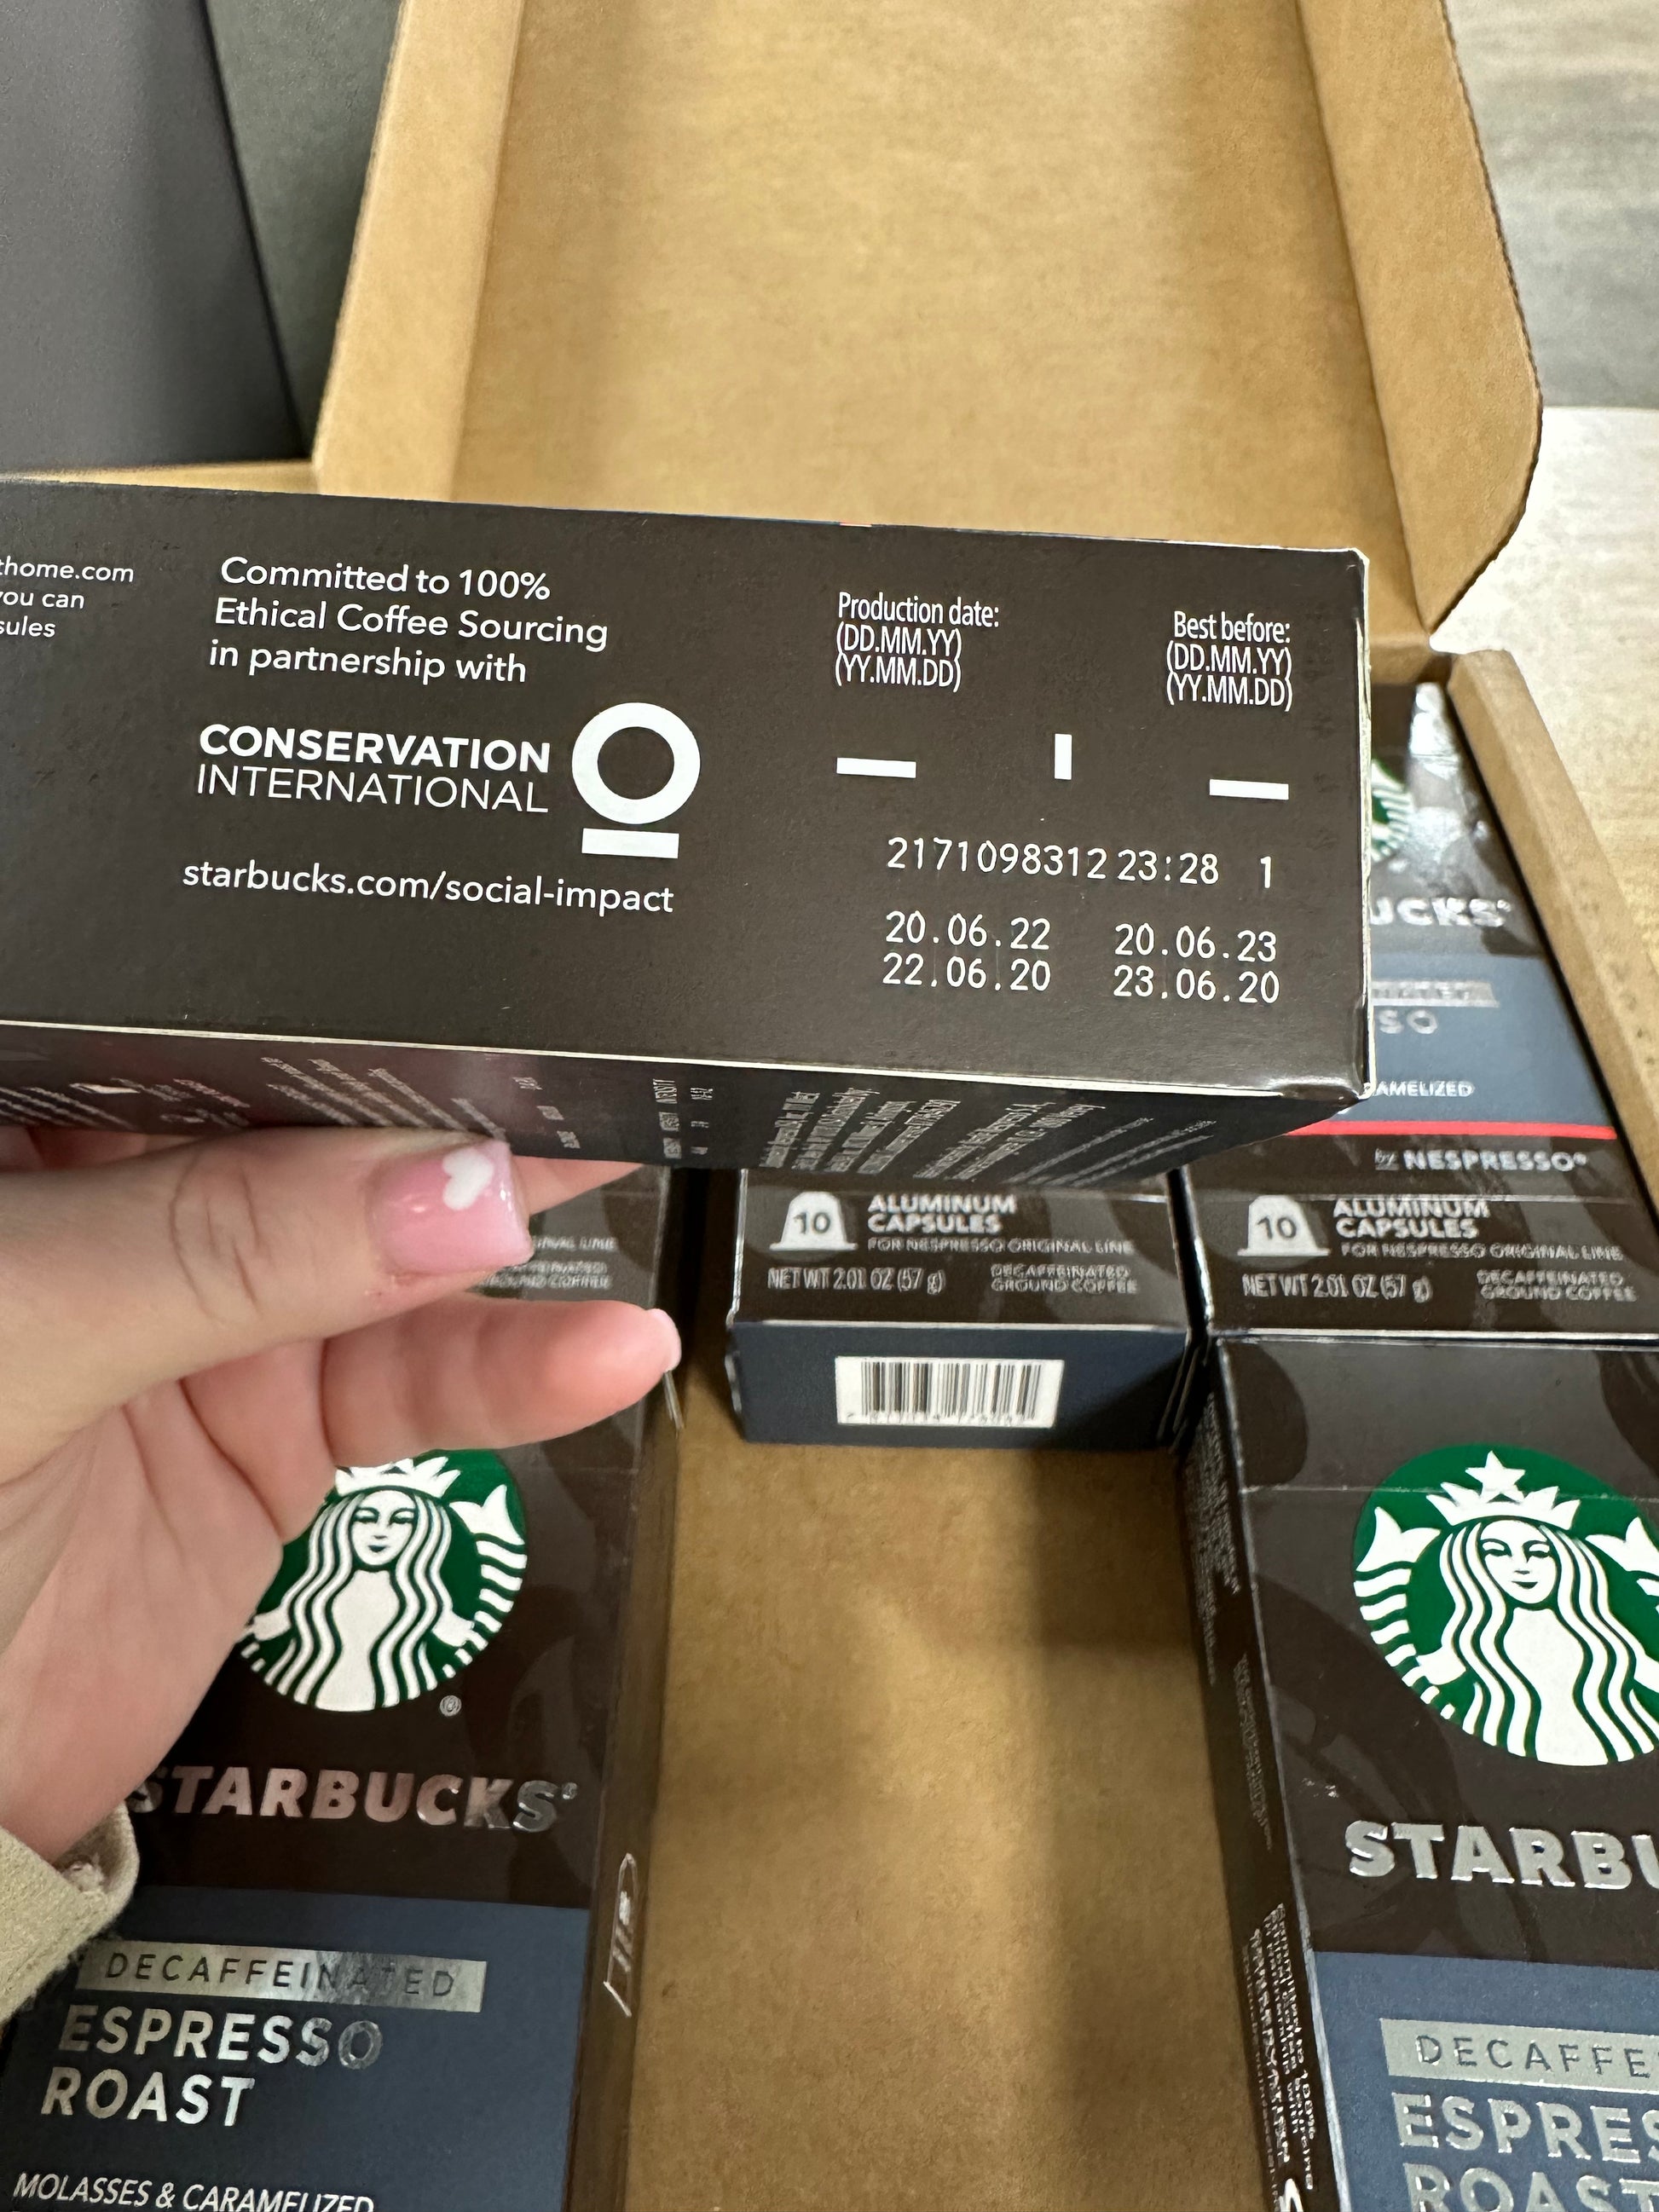 Starbucks Nespresso Original Line Variety Pack Capsules, 60 Count, Pack of 1